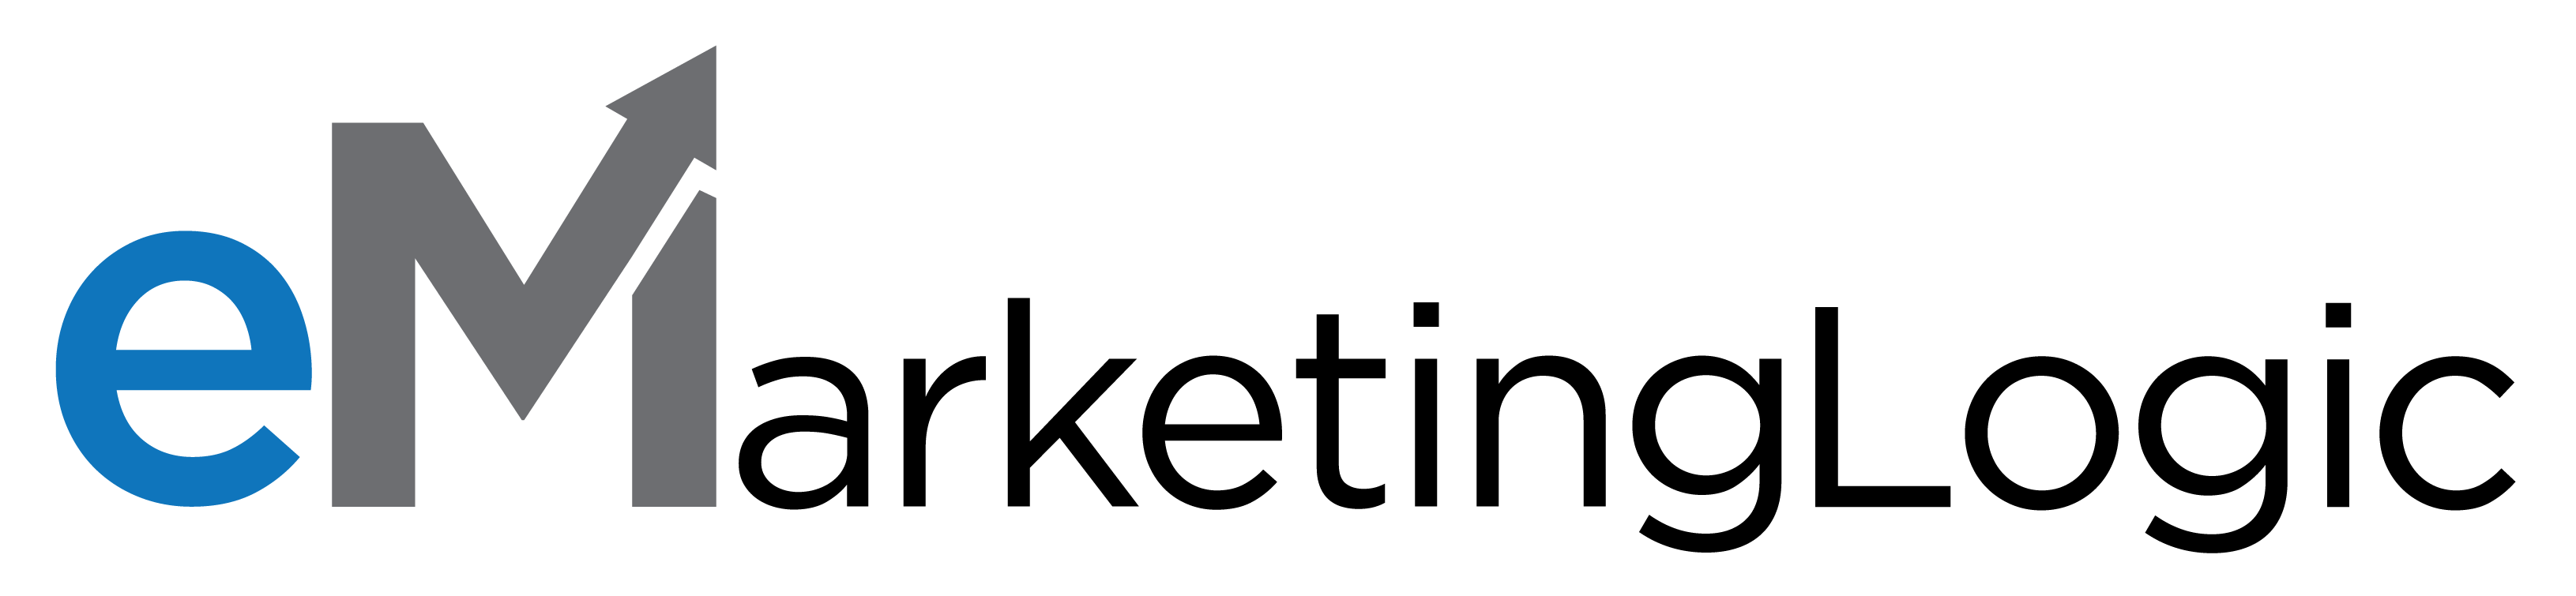 eMarketing Logic logo